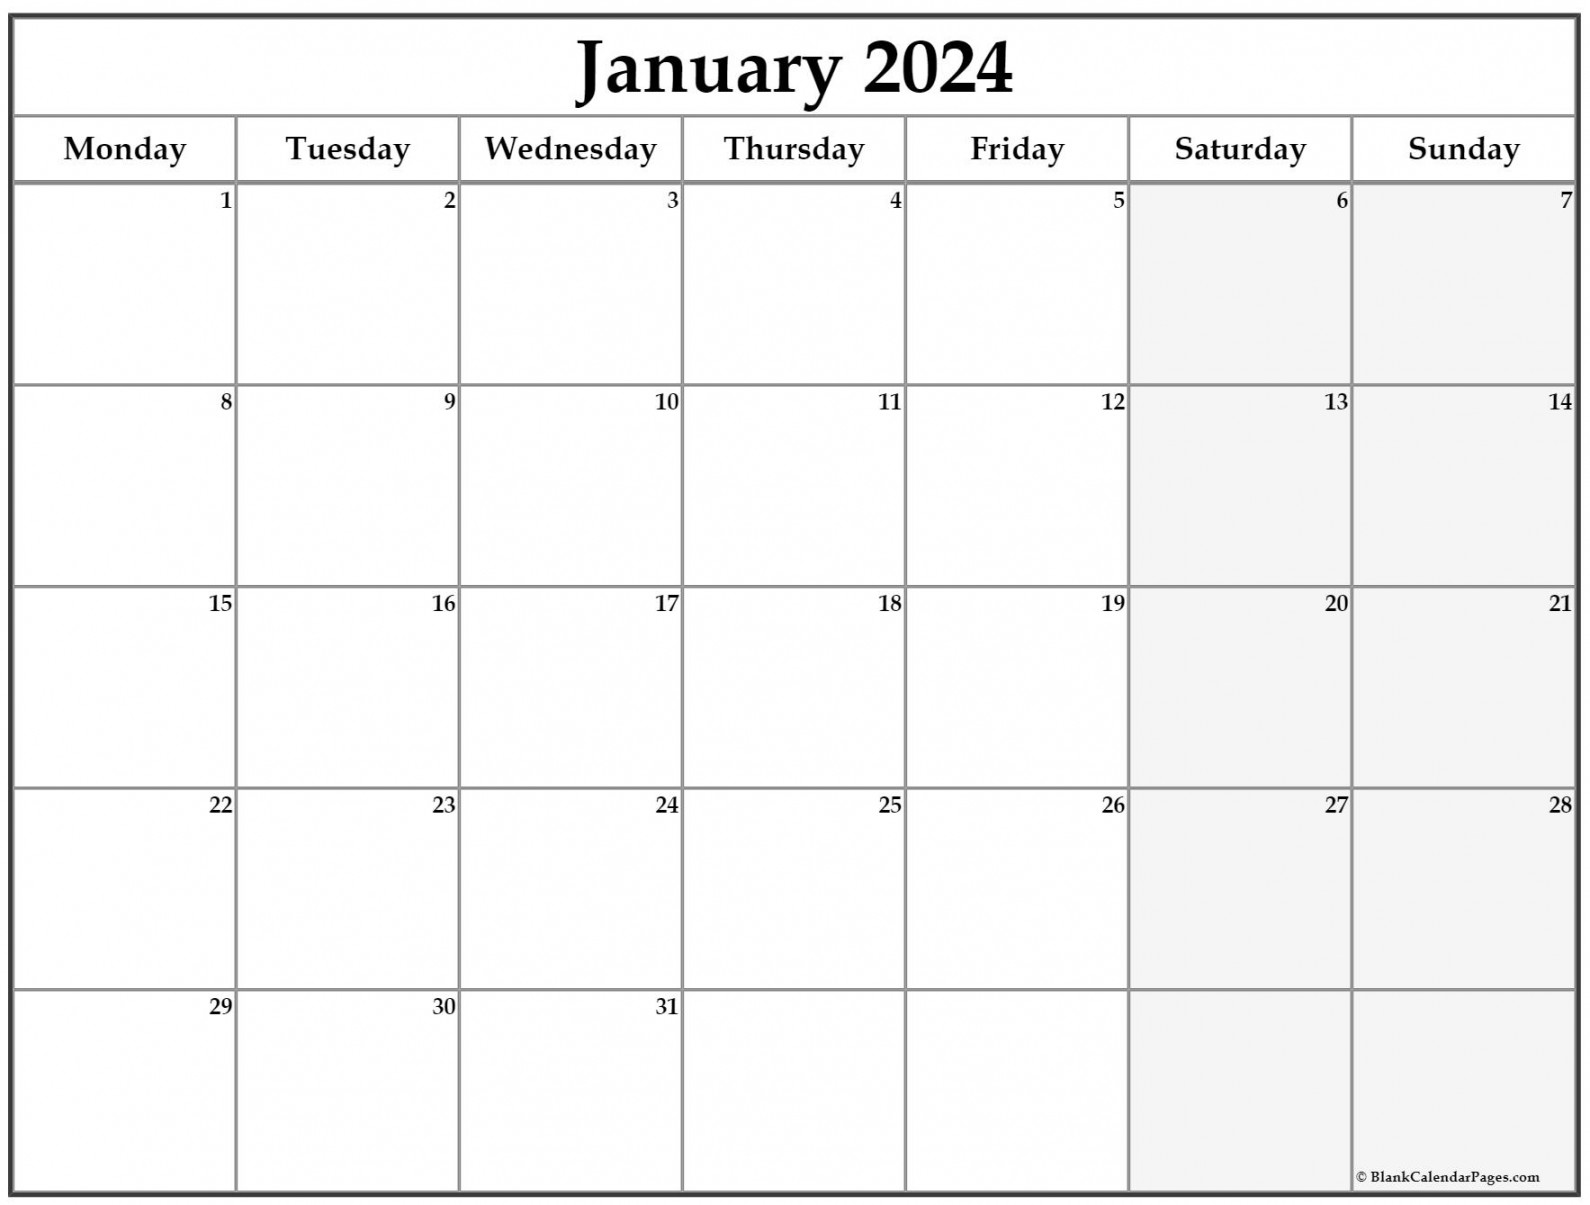 january monday calendar monday to sunday 1